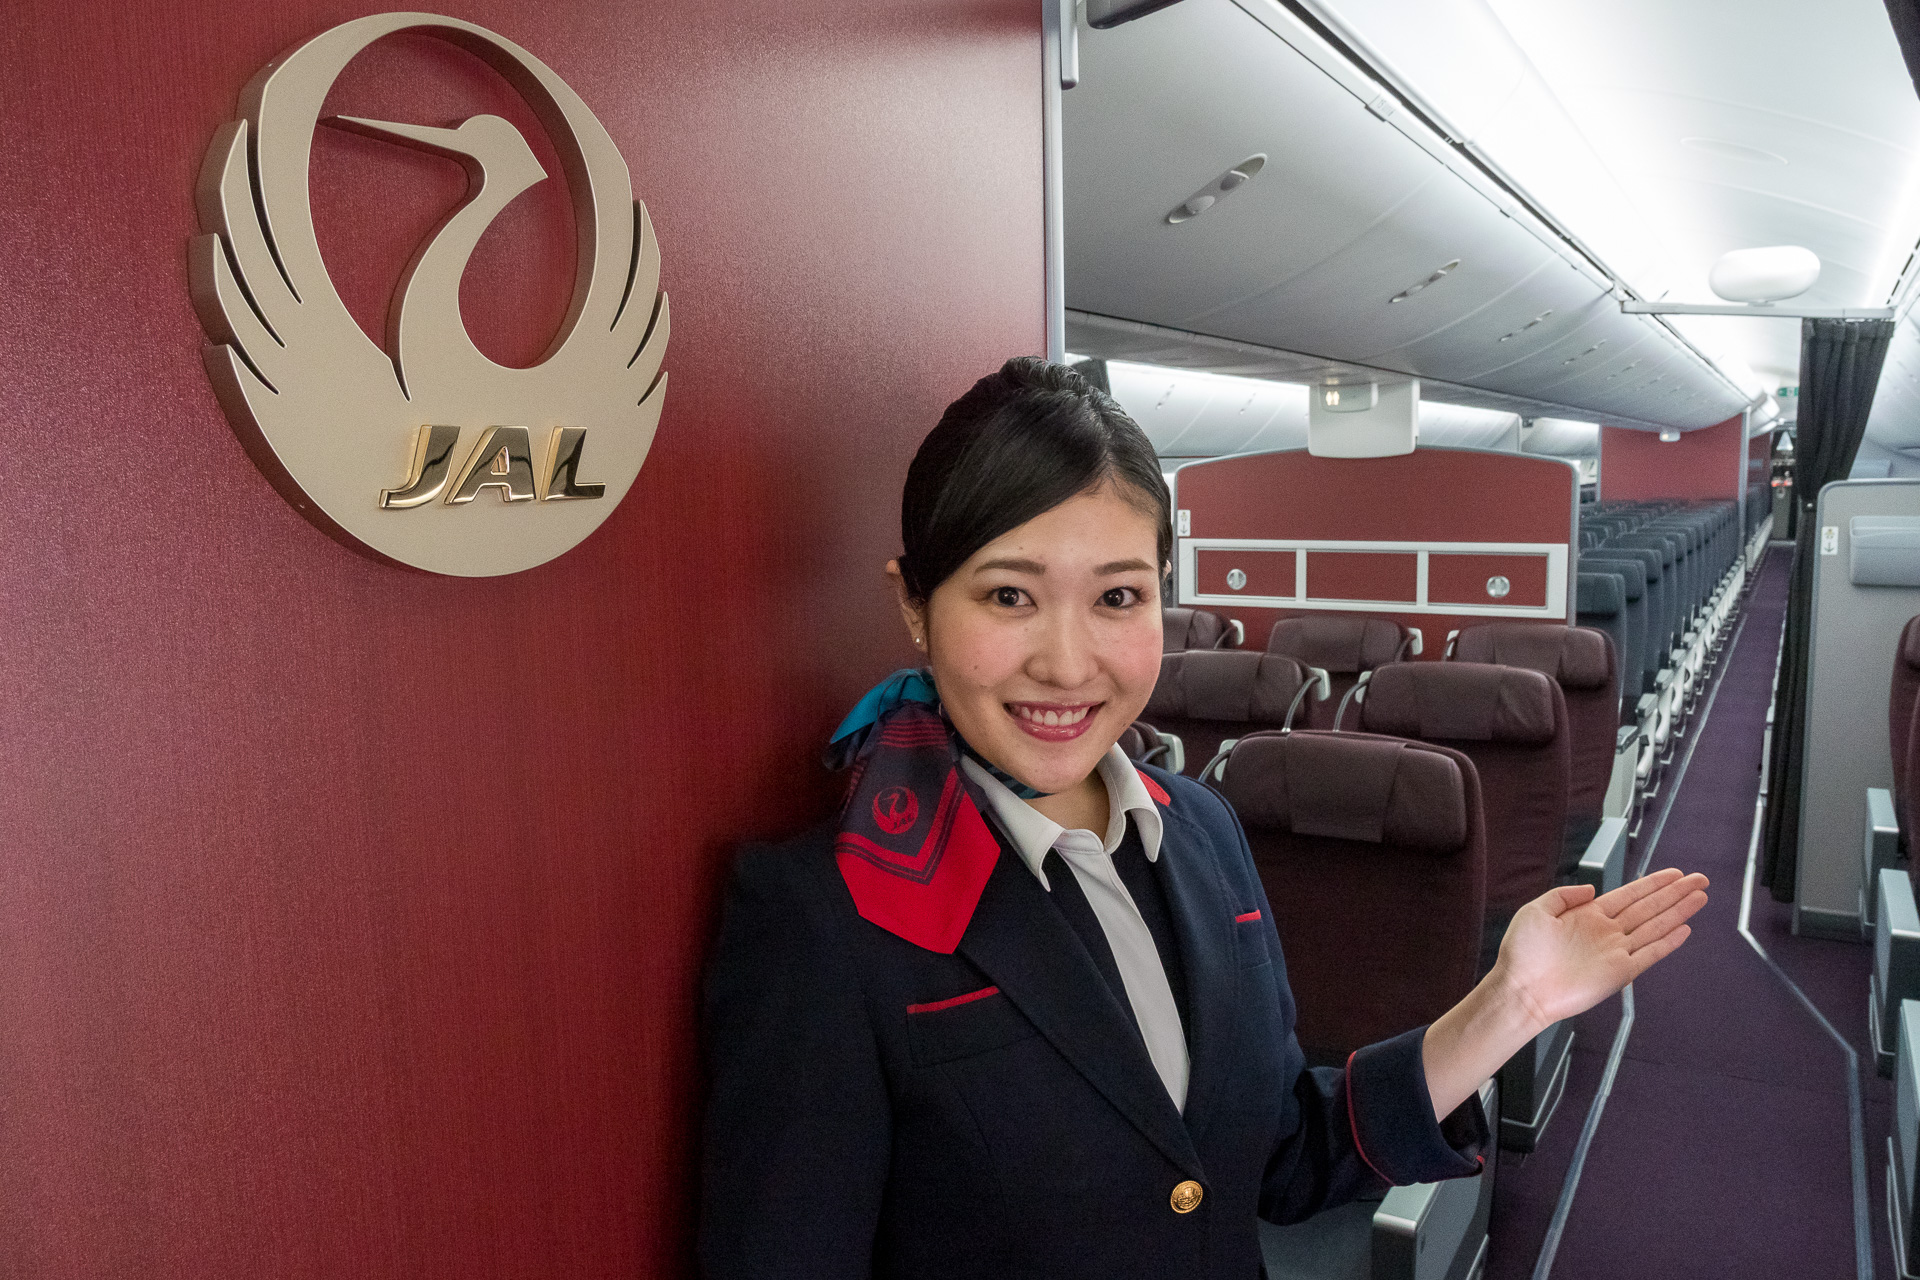 Jal 国内線向けボーイング 787型機を公開 機内は 日本の伝統美 テーマに 10月27日運航開始 トラベル Watch